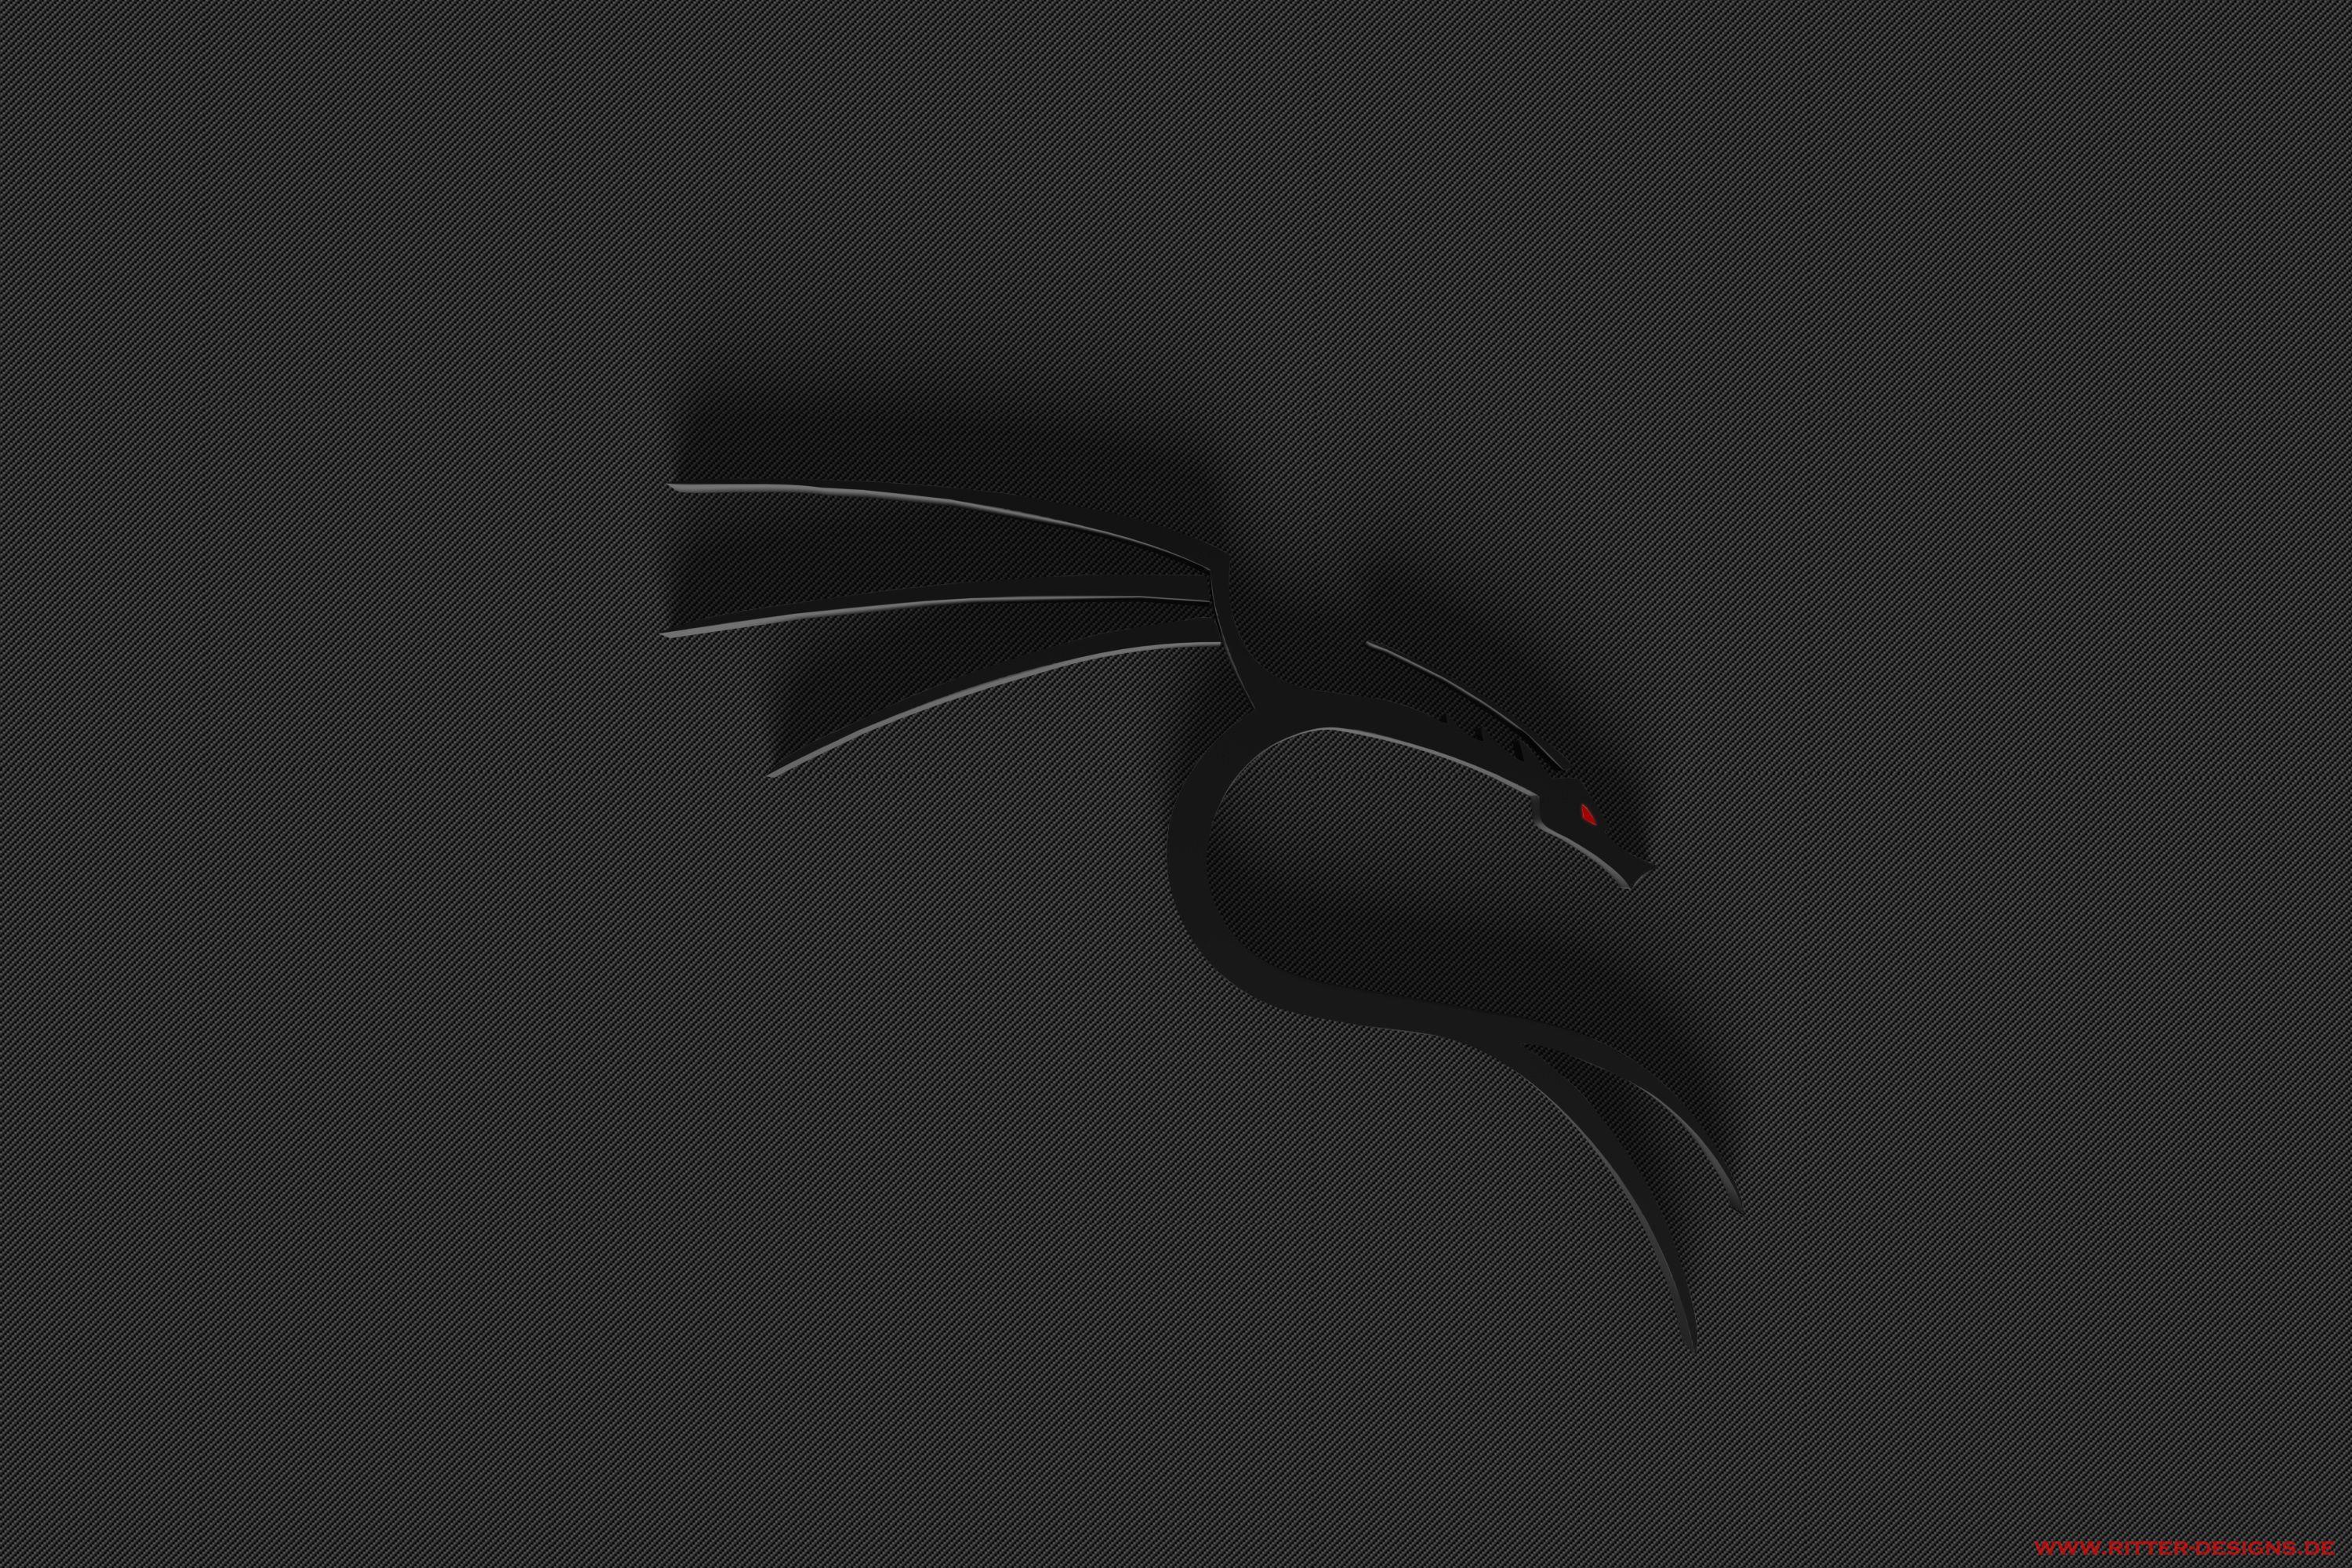 Kali Linux Black Wallpapers Top Free Kali Linux Black Backgrounds